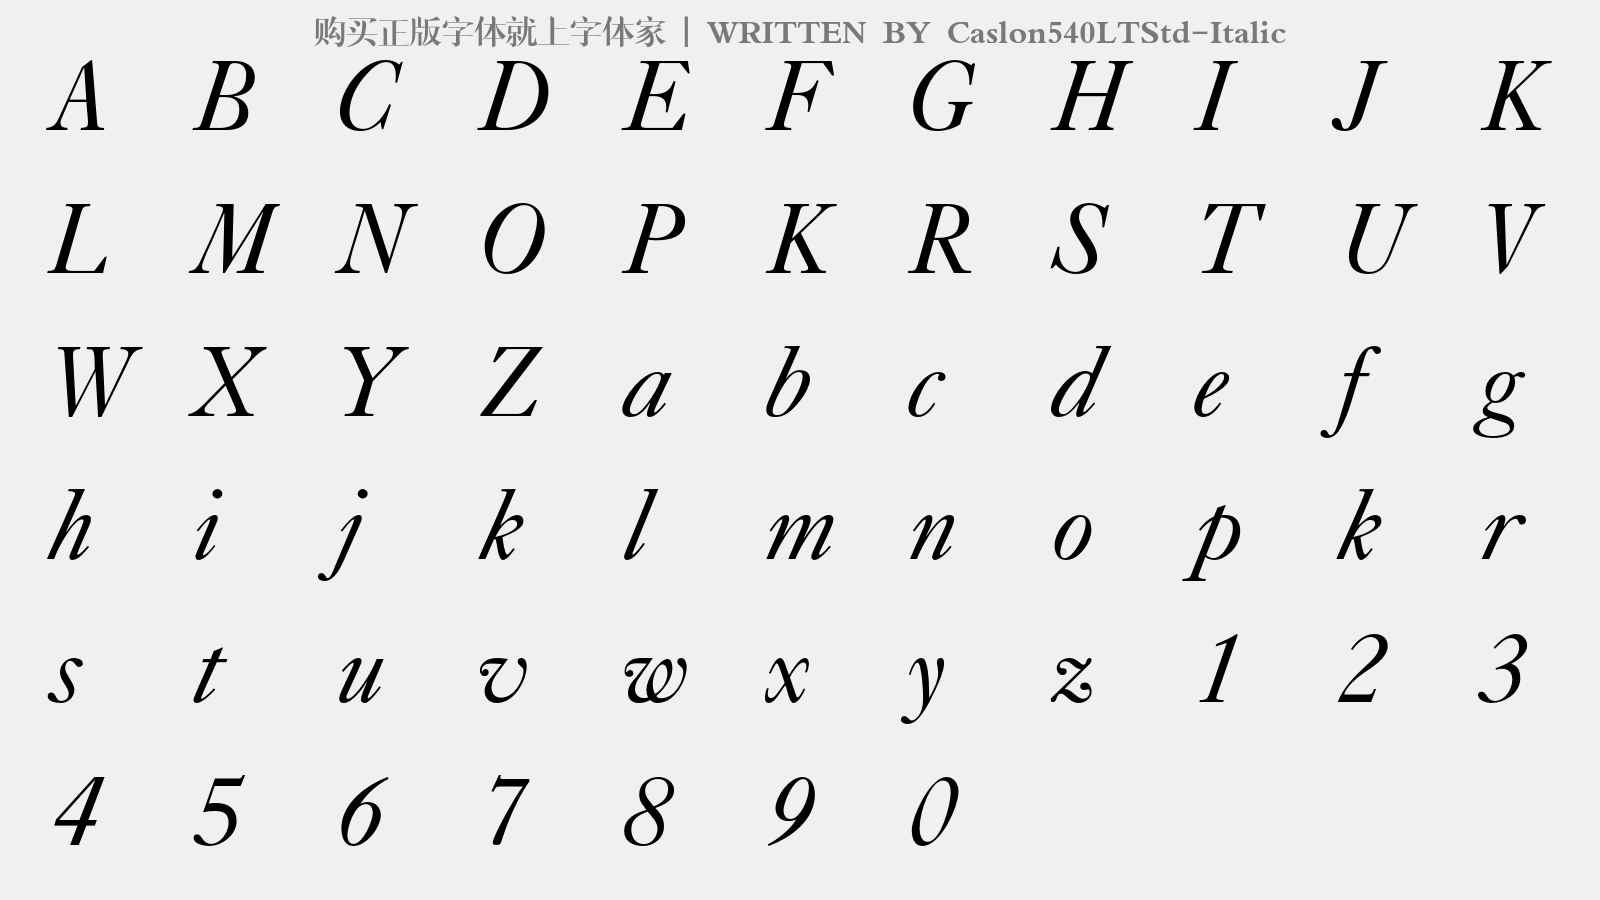 Caslon540LTStd-Italic - 大写字母/小写字母/数字